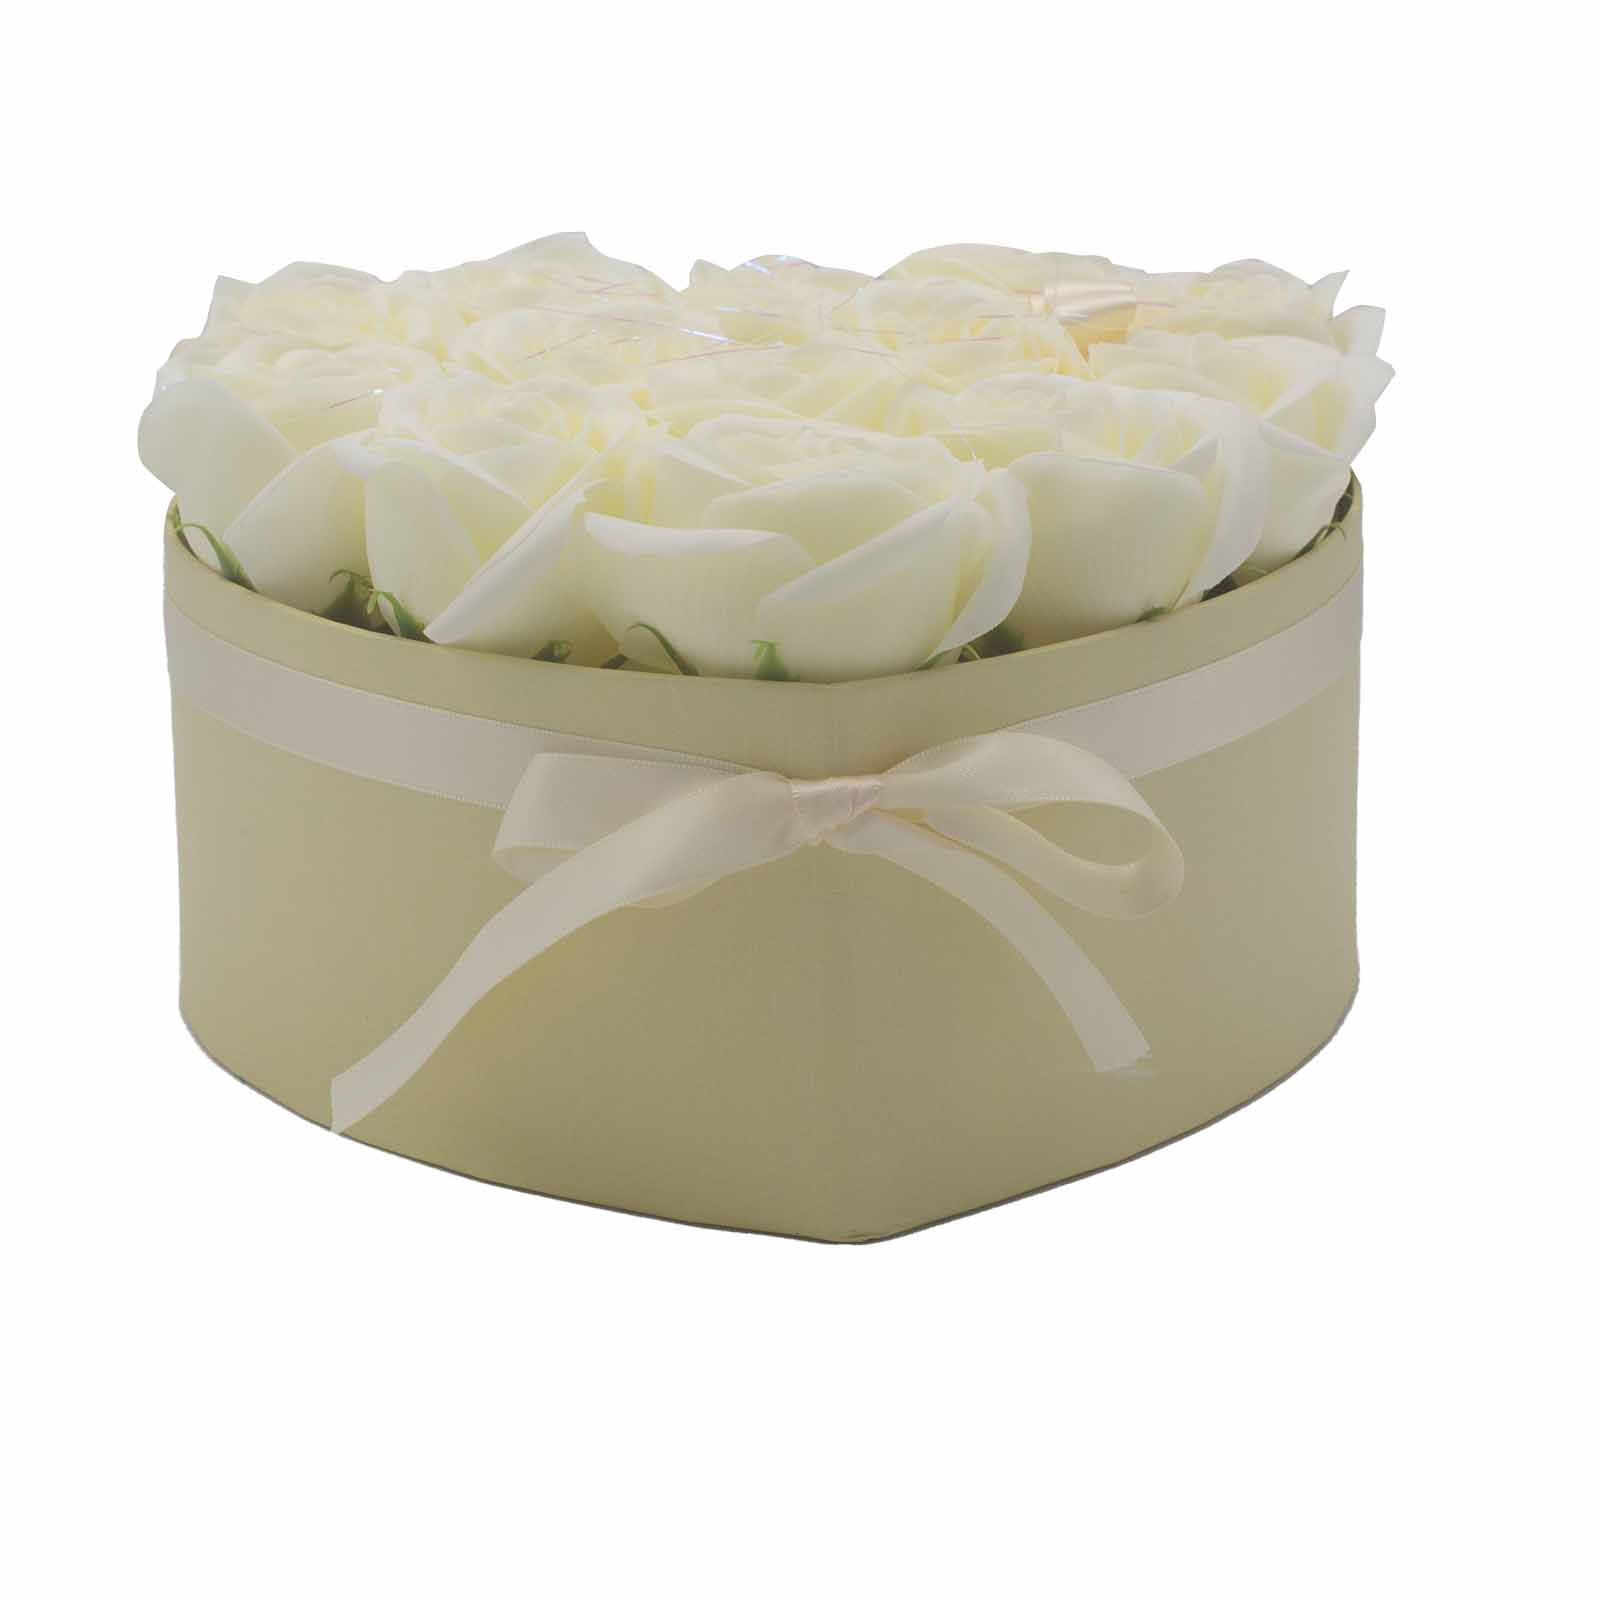 Soap Flower Gift Bouquet - 13 Cream Roses - Heart